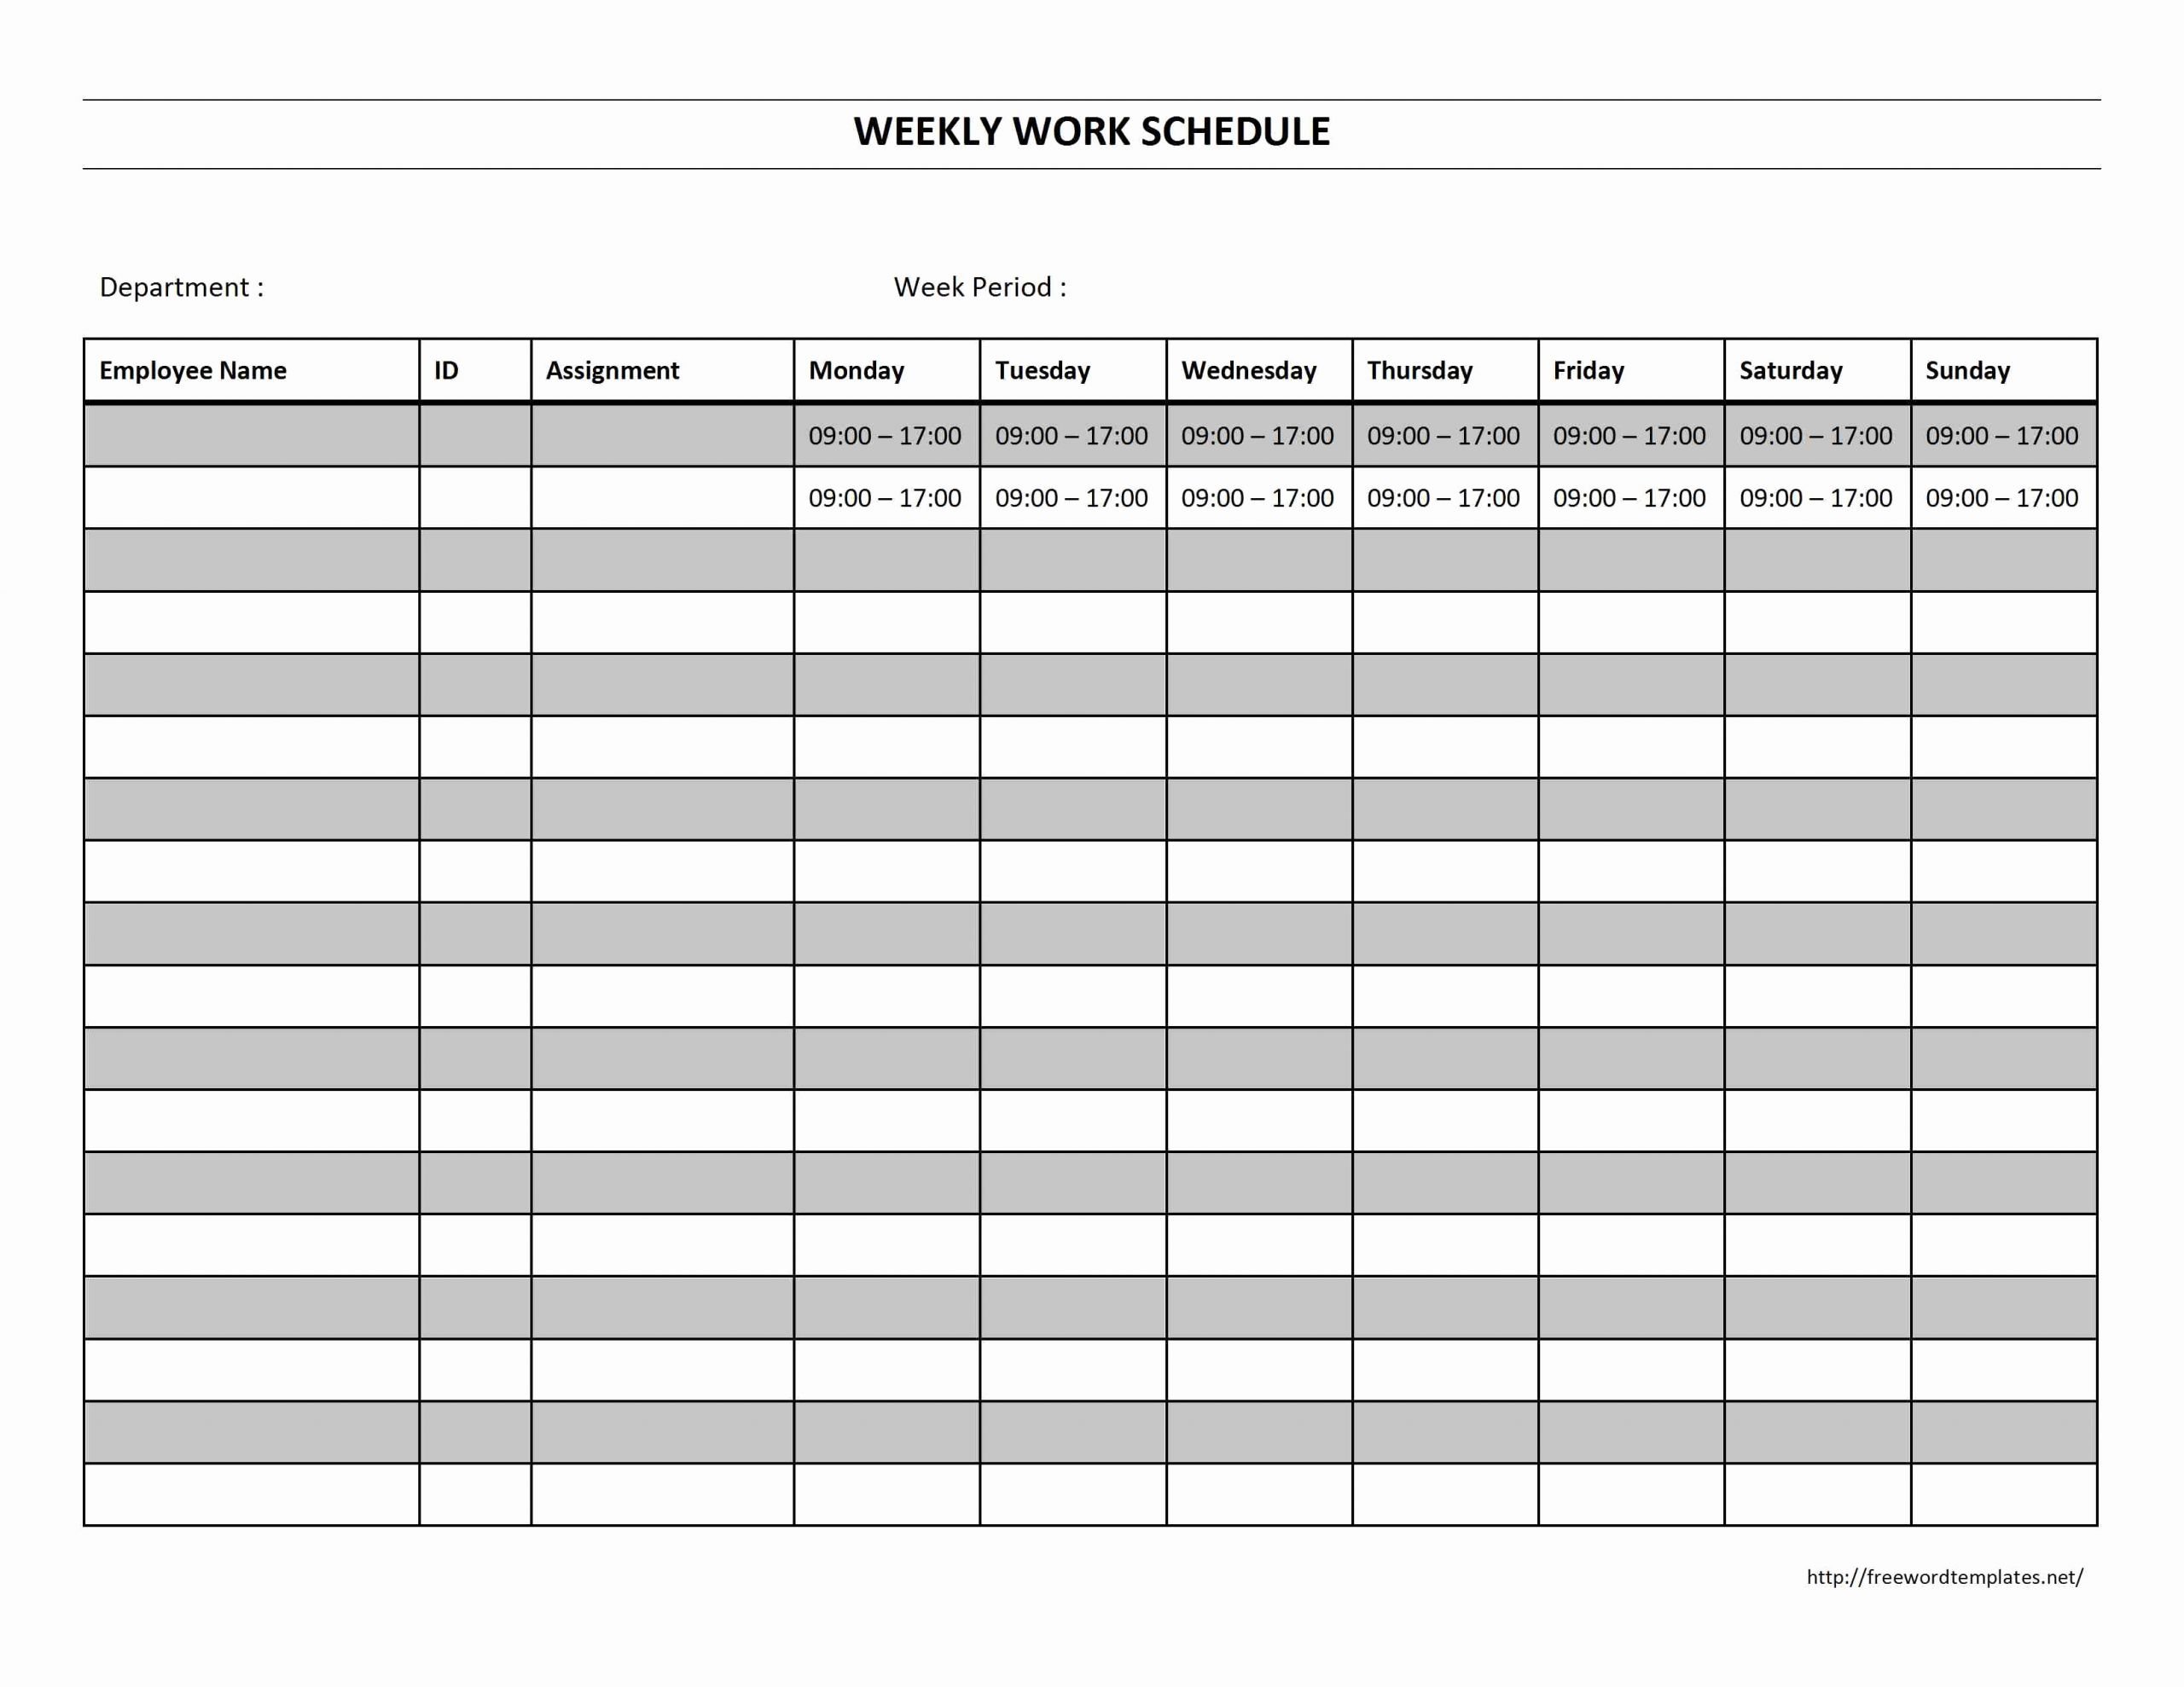 Employees Schedule Template Free New Weekly Work Schedule